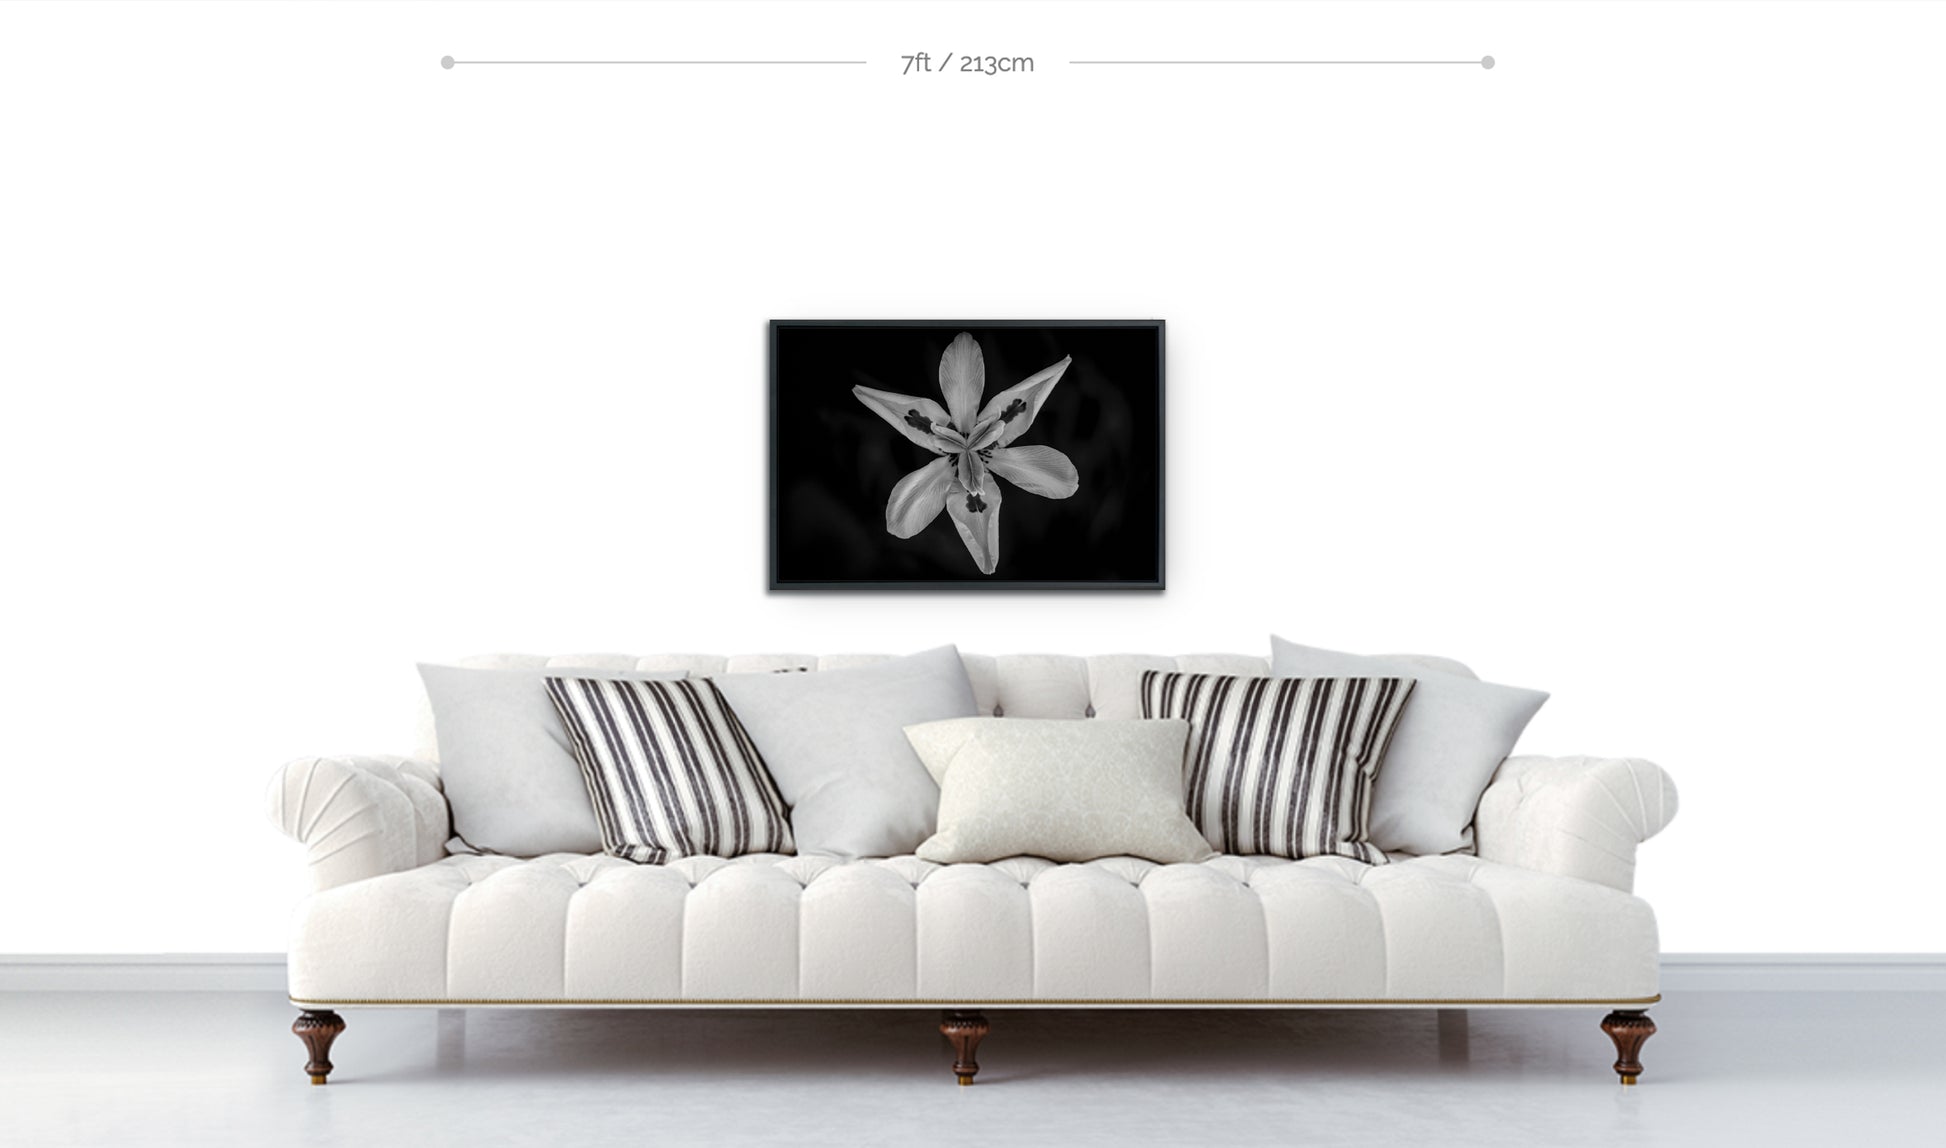 Flower wall art framed metal print photograph closeup fortnight lily hanging above sofa